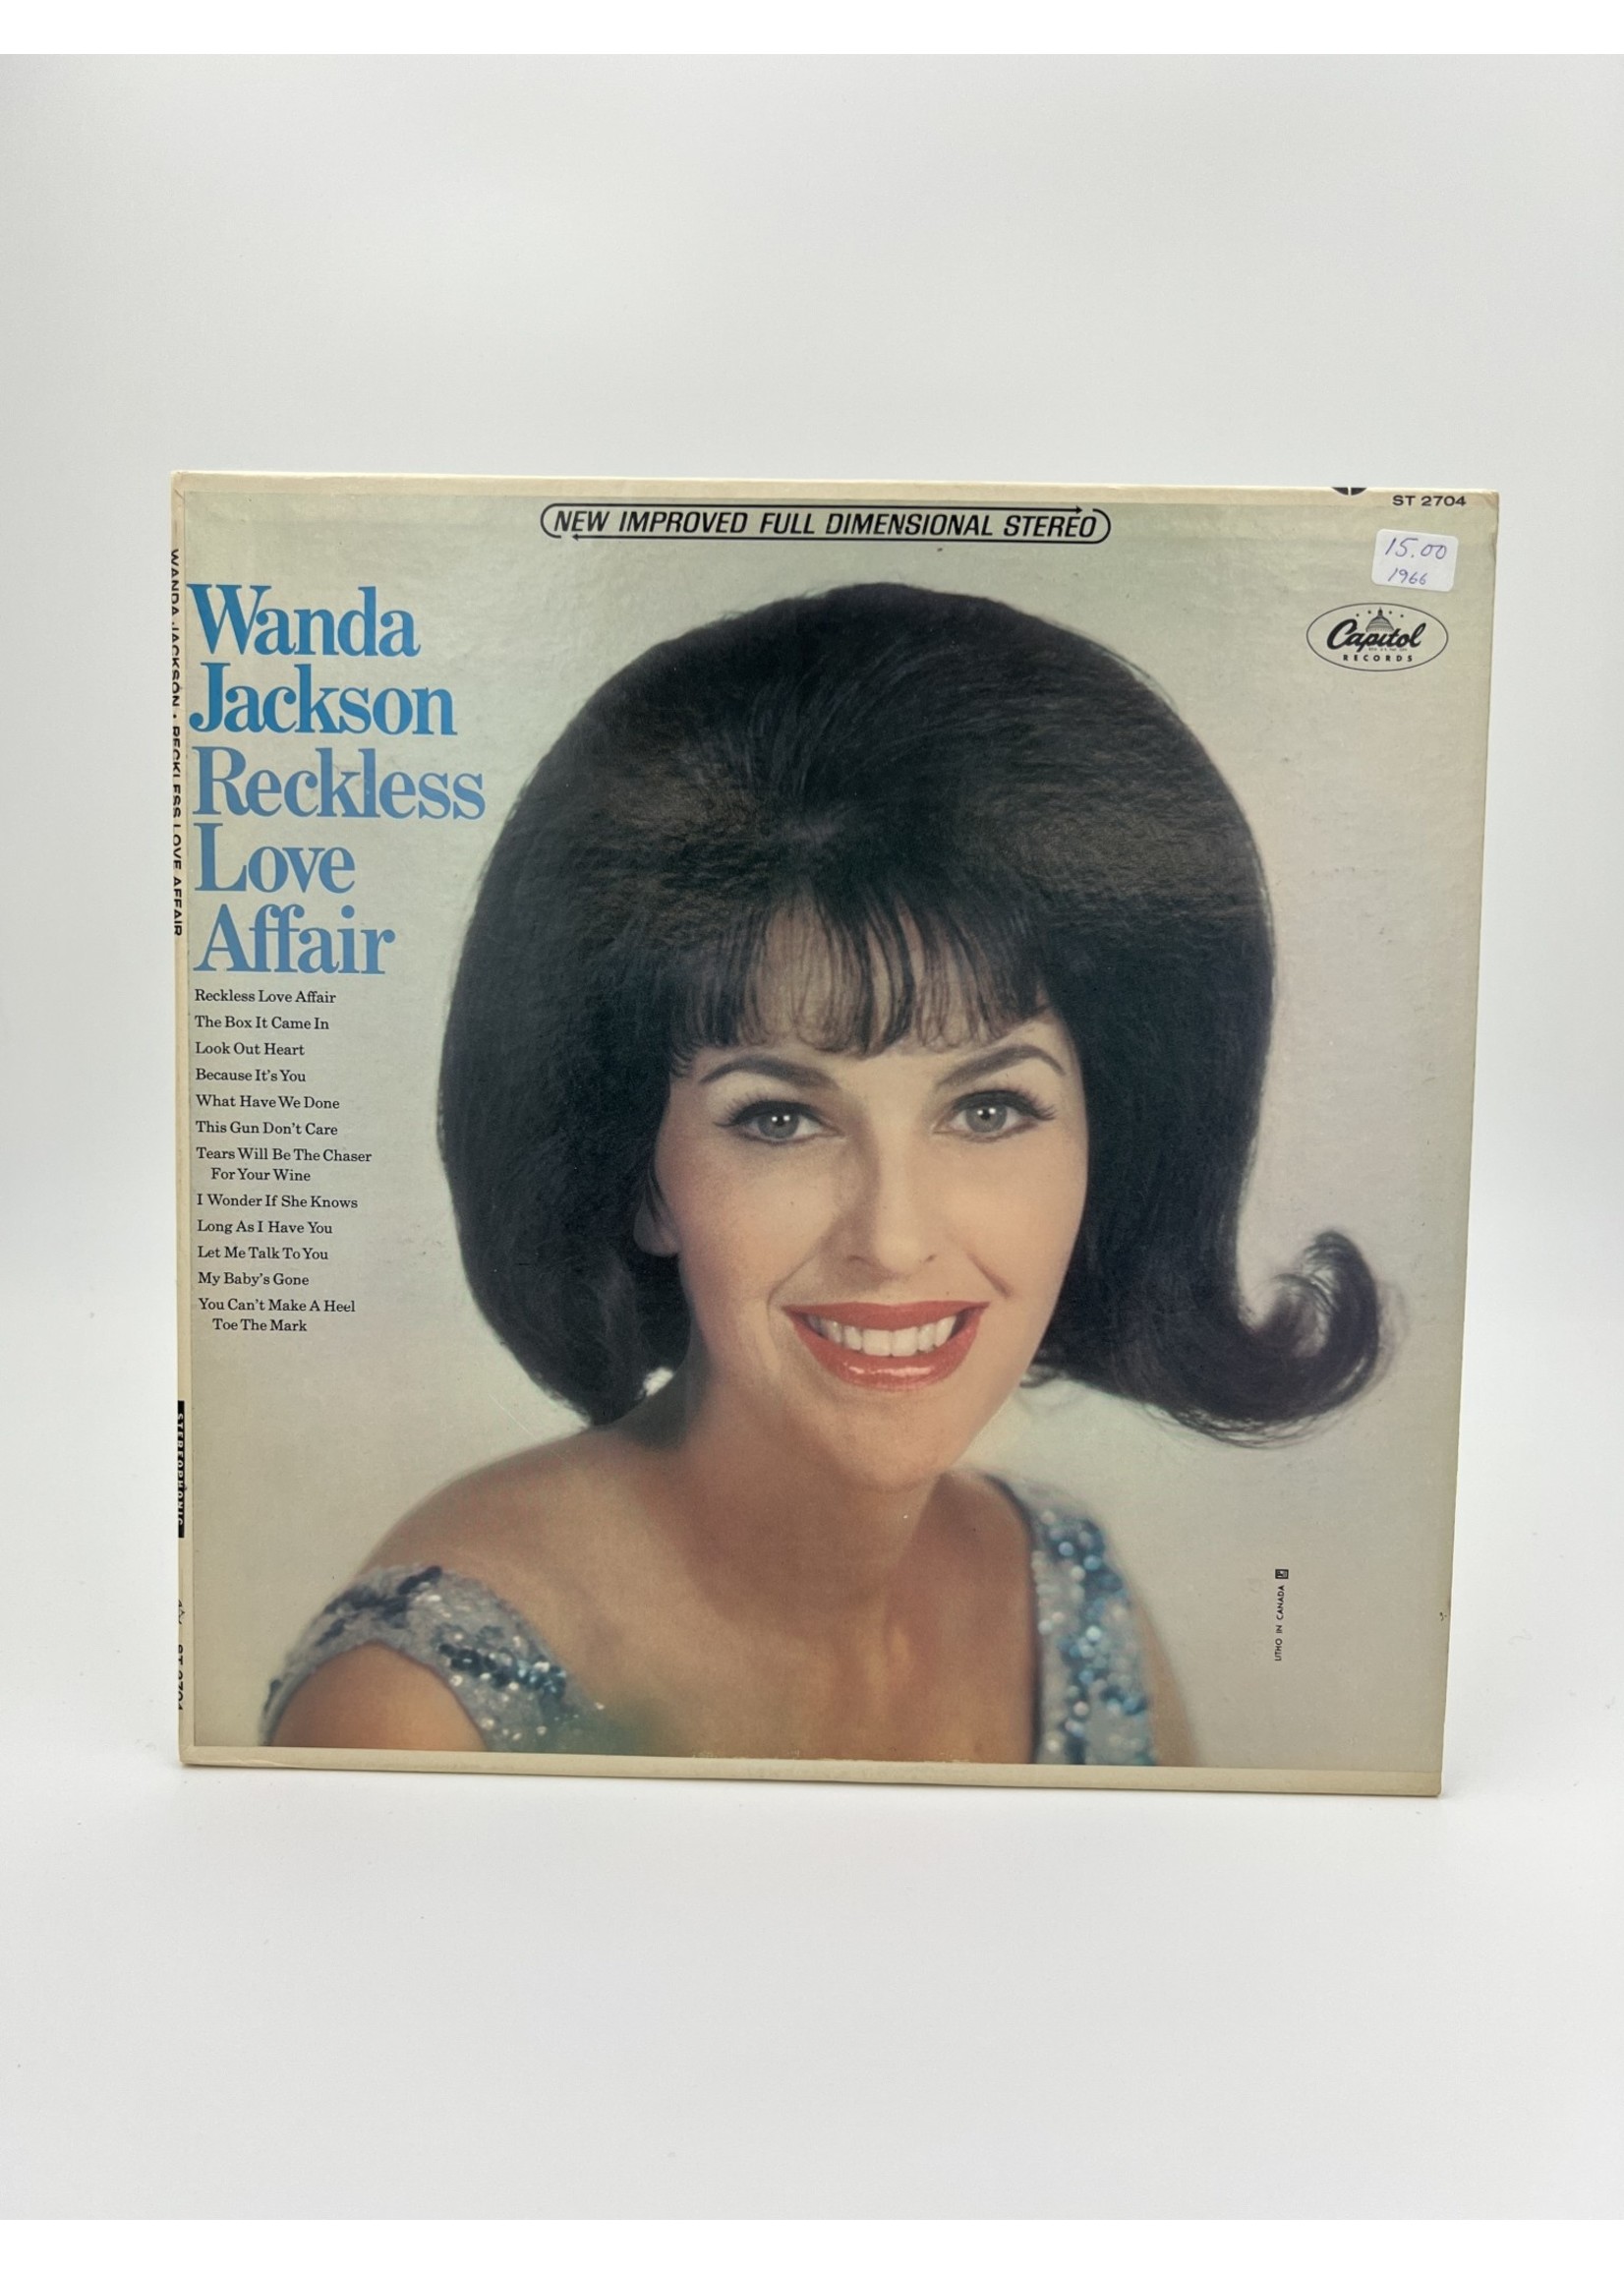 LP Wanda Jackson Reckless Love Affair LP RECORD